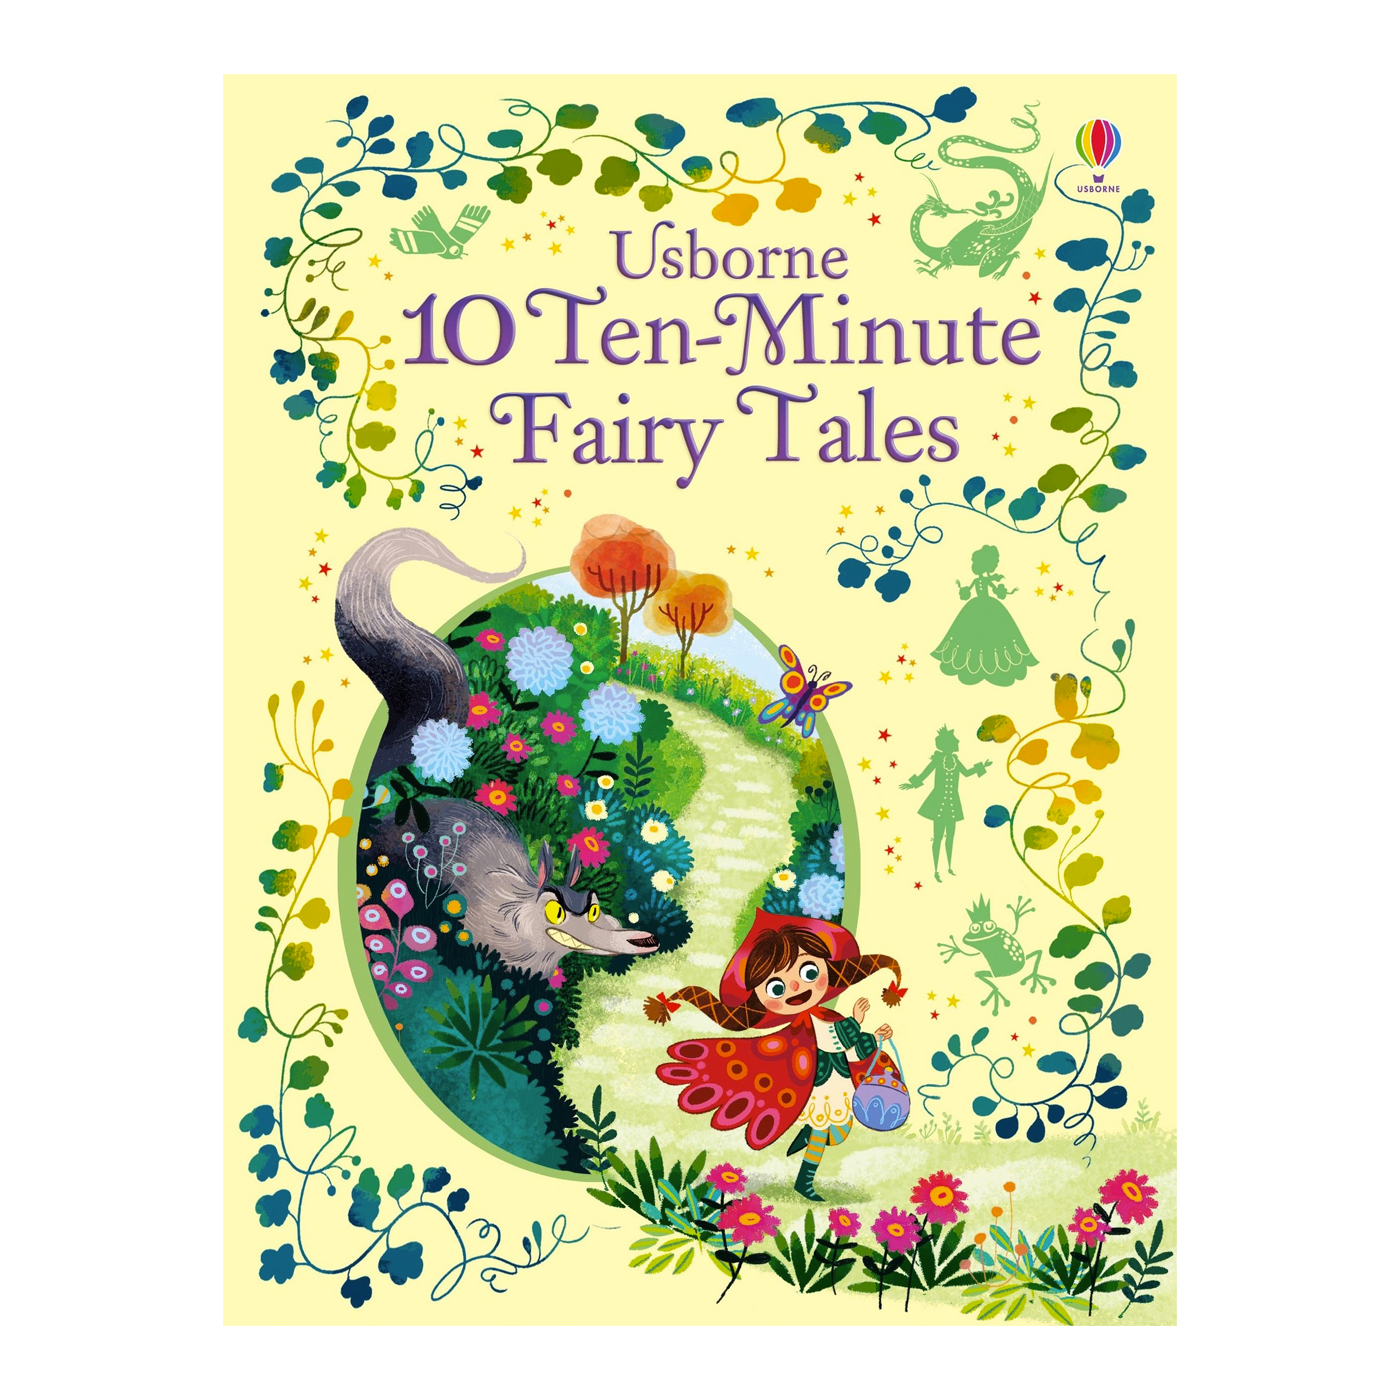 USBORNE 10 Ten-Minute Fairy Tales